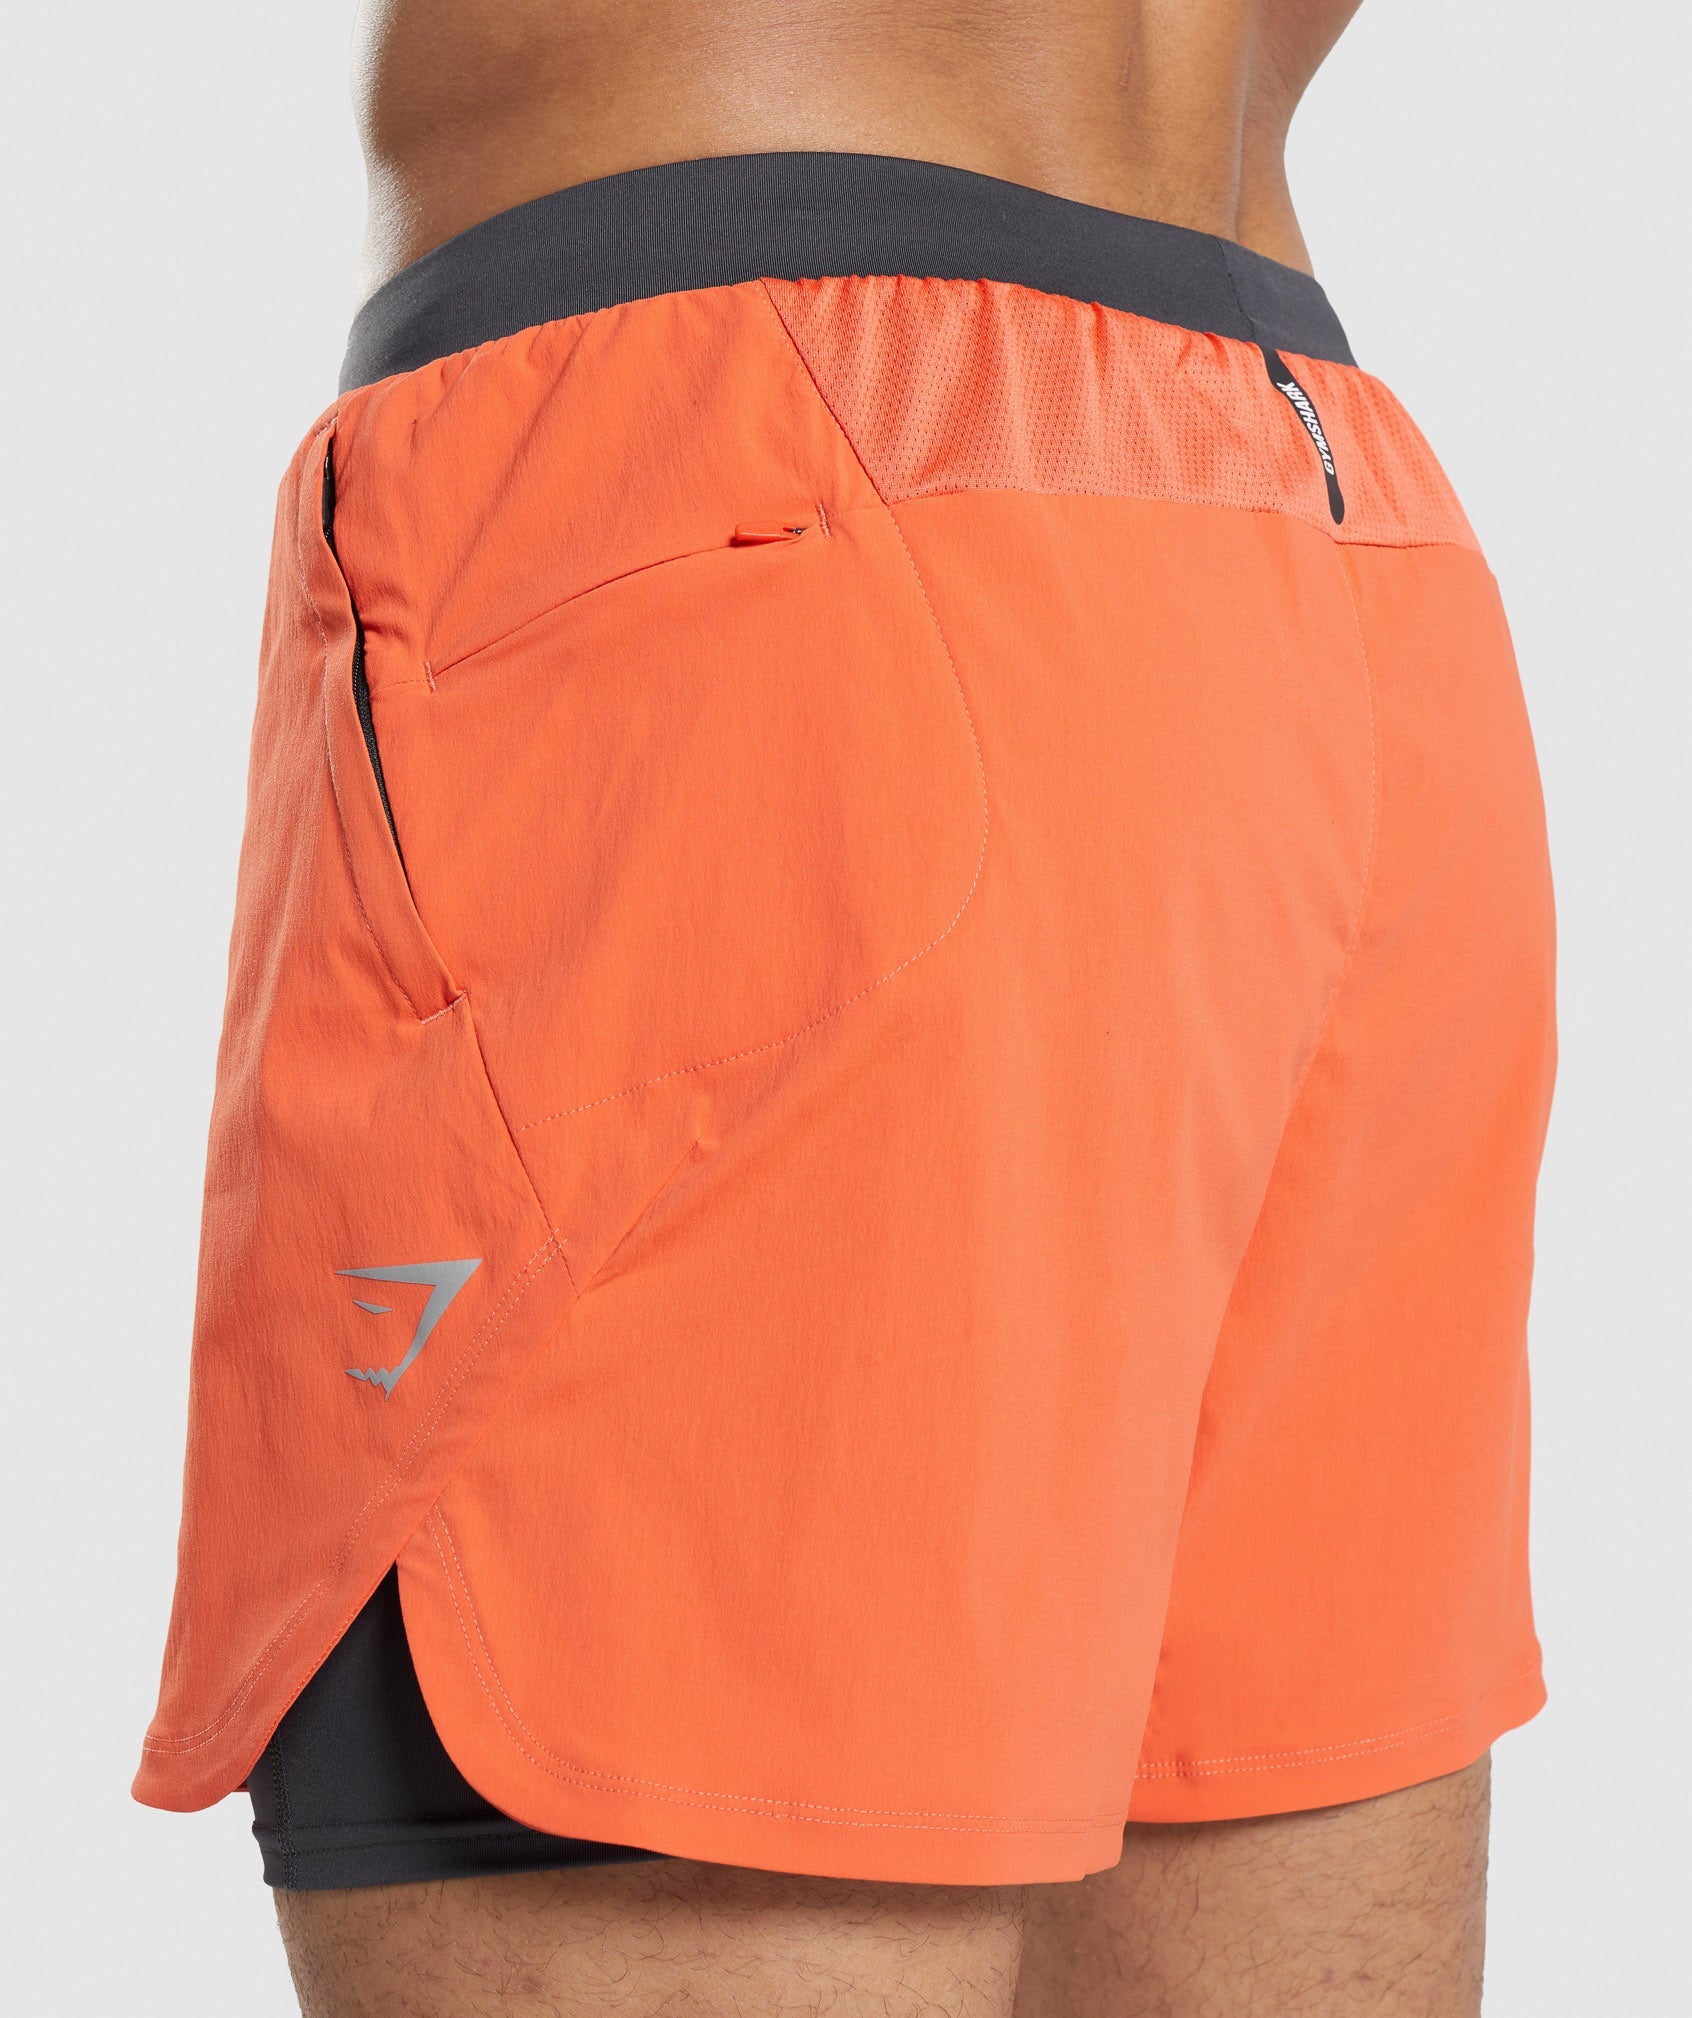 Speed Evolve 5" 2 In 1 Shorts in Papaya Orange